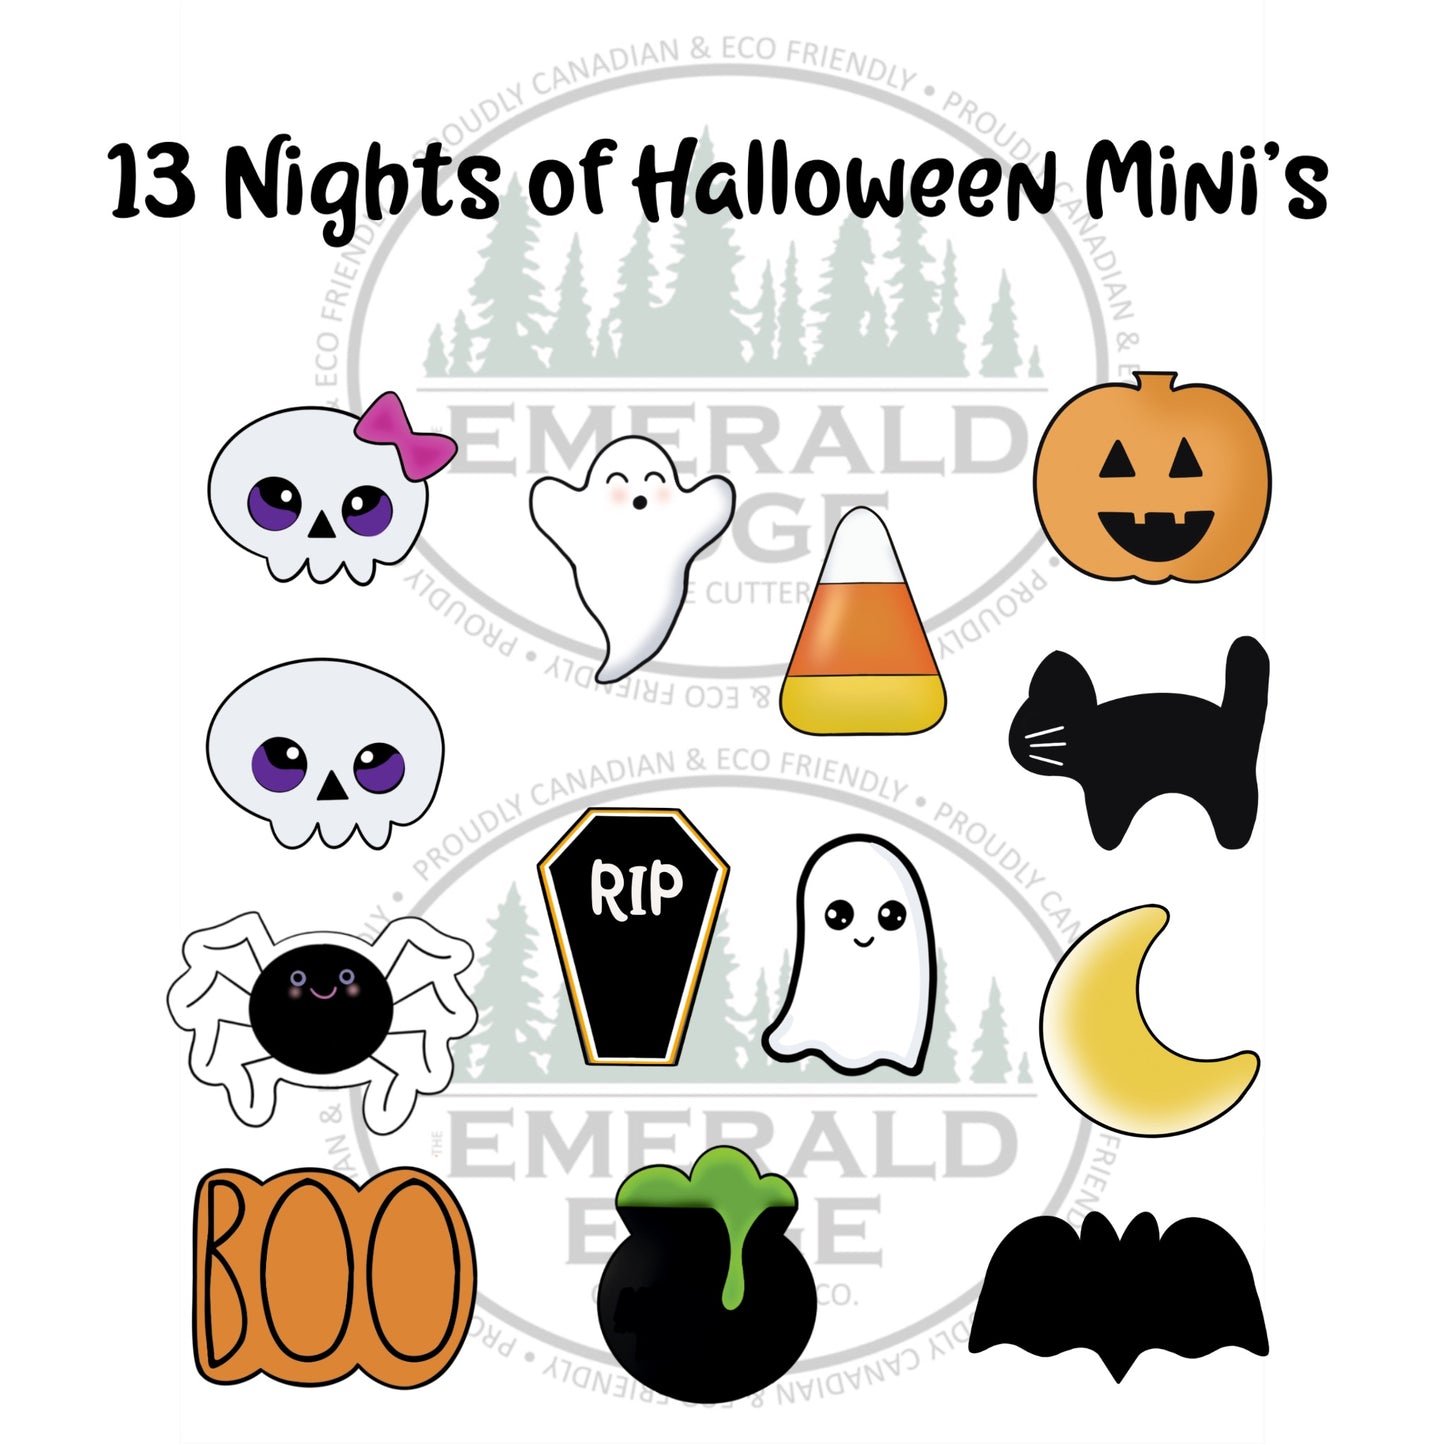 13 Nights of Halloween Mini's